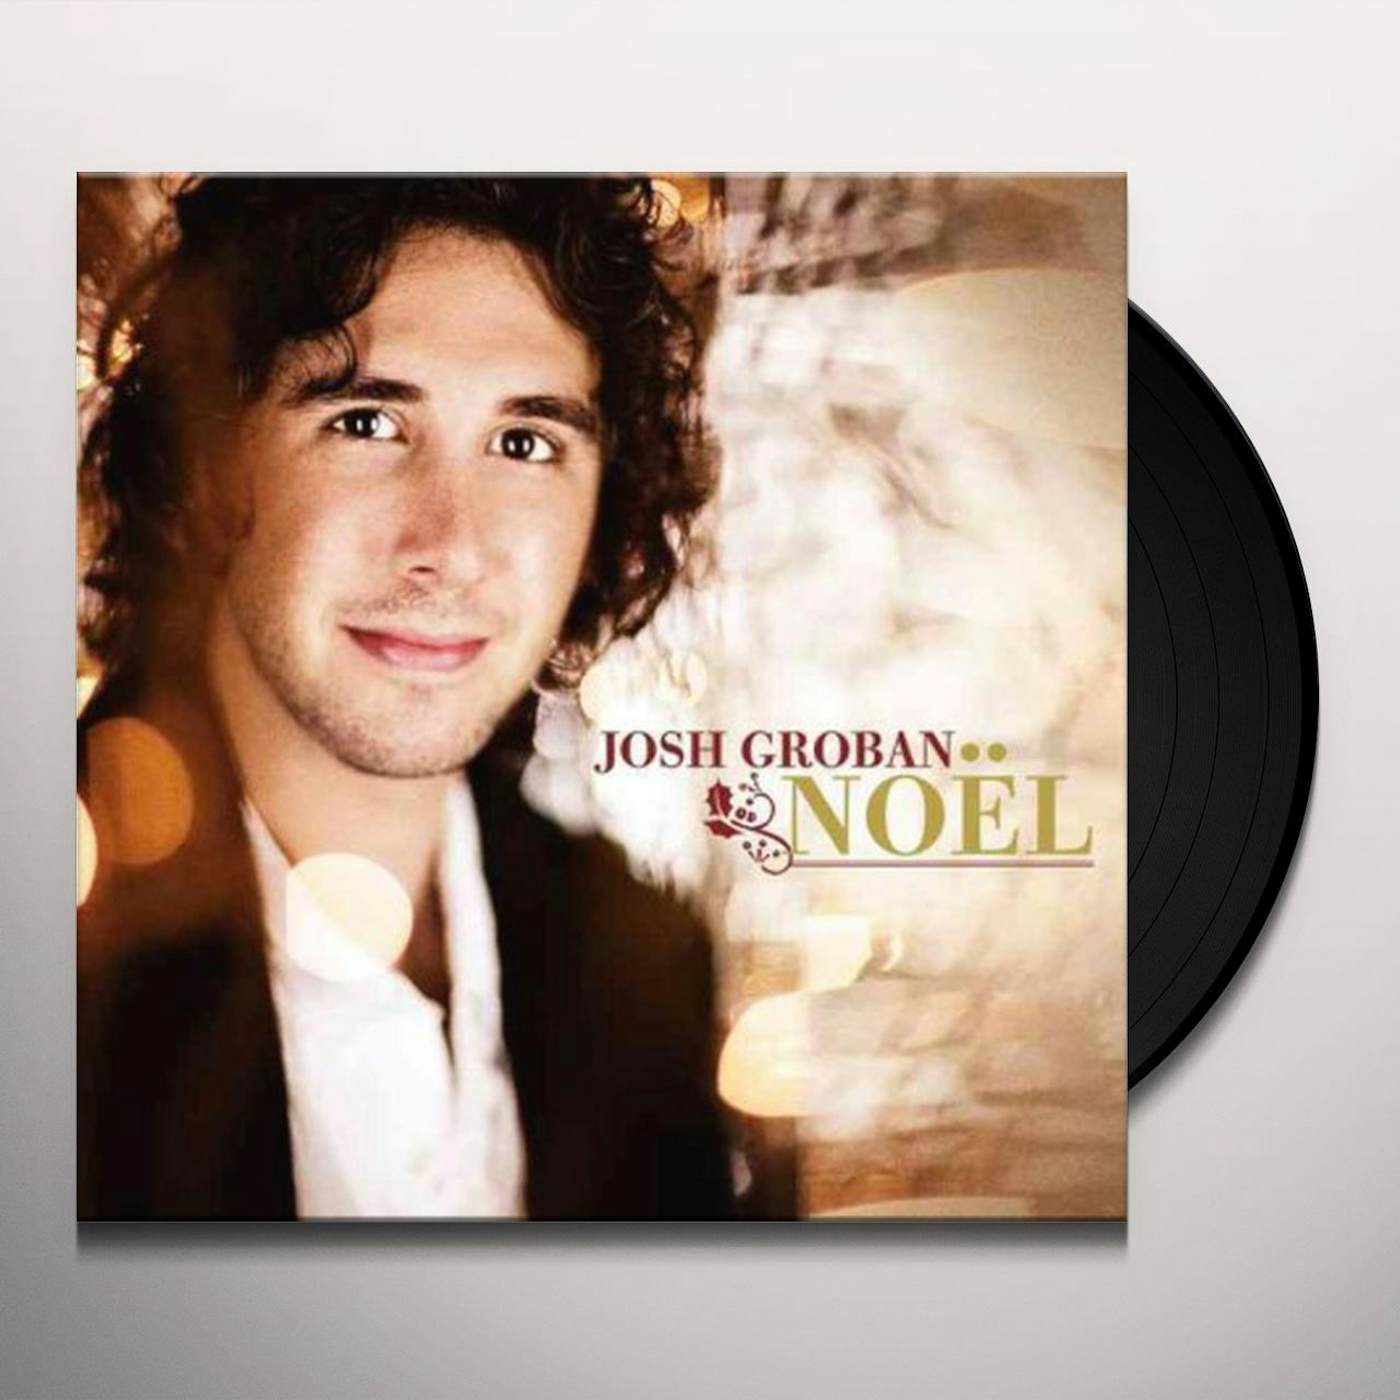 Josh Groban Noel Vinyl Record